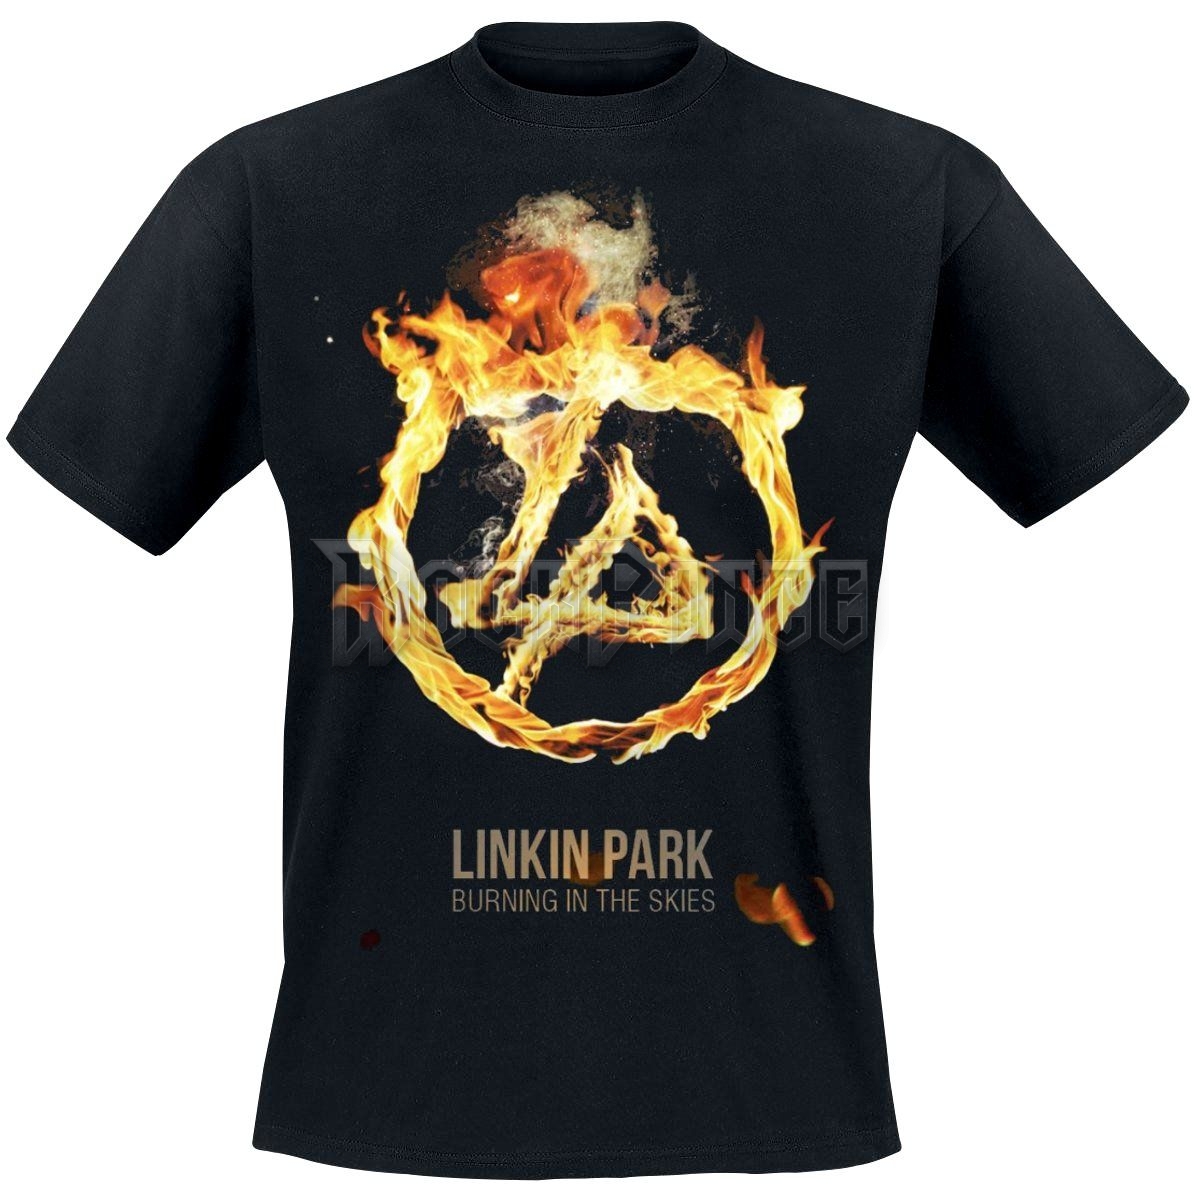 Linkin Park - Burning In The Skies - UNISEX PÓLÓ